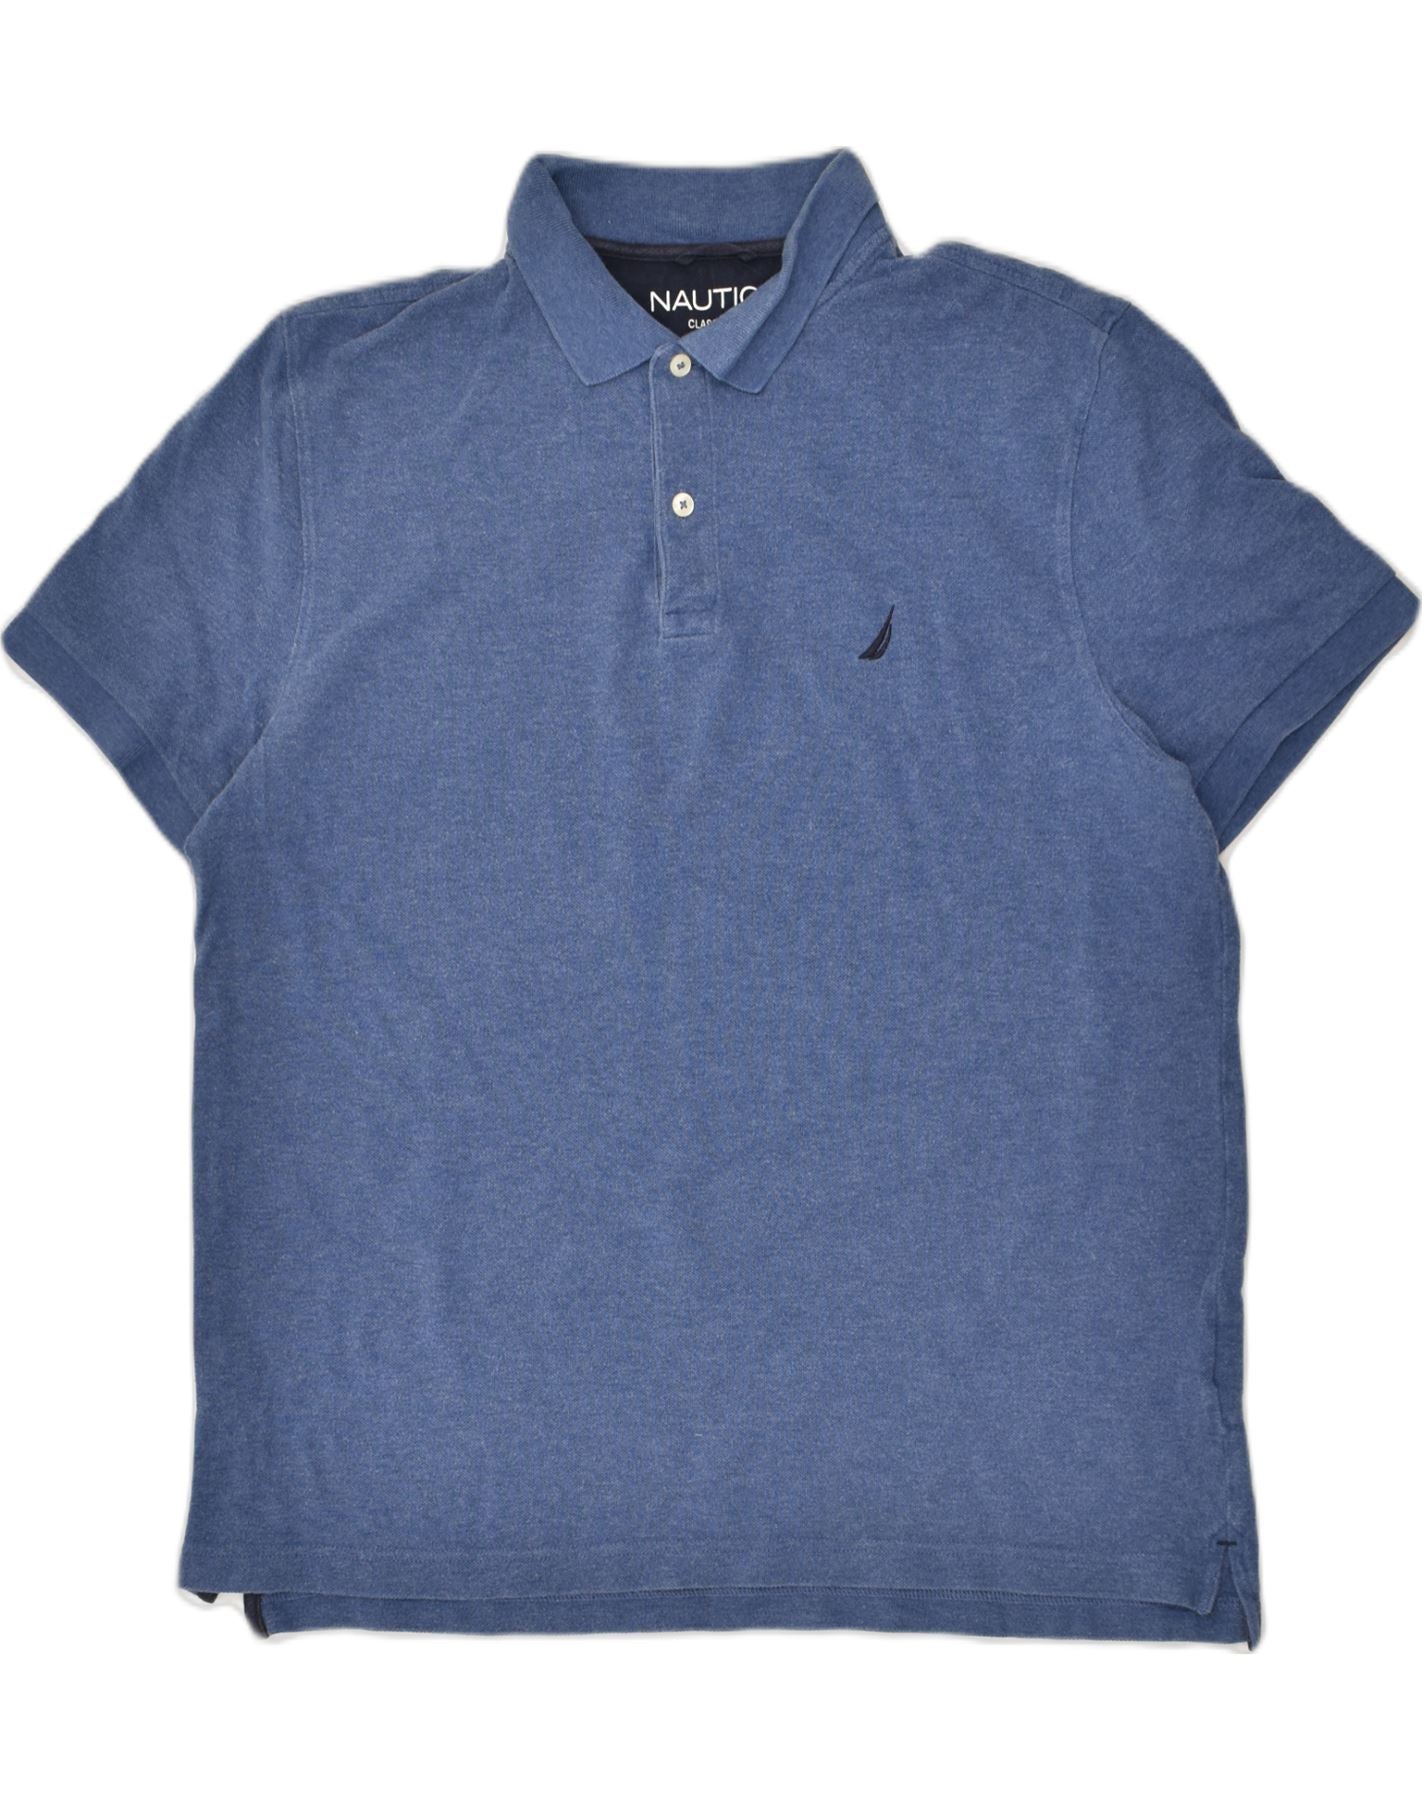 NAUTICA Mens Classic Fit Polo Shirt Large Navy Blue Cotton